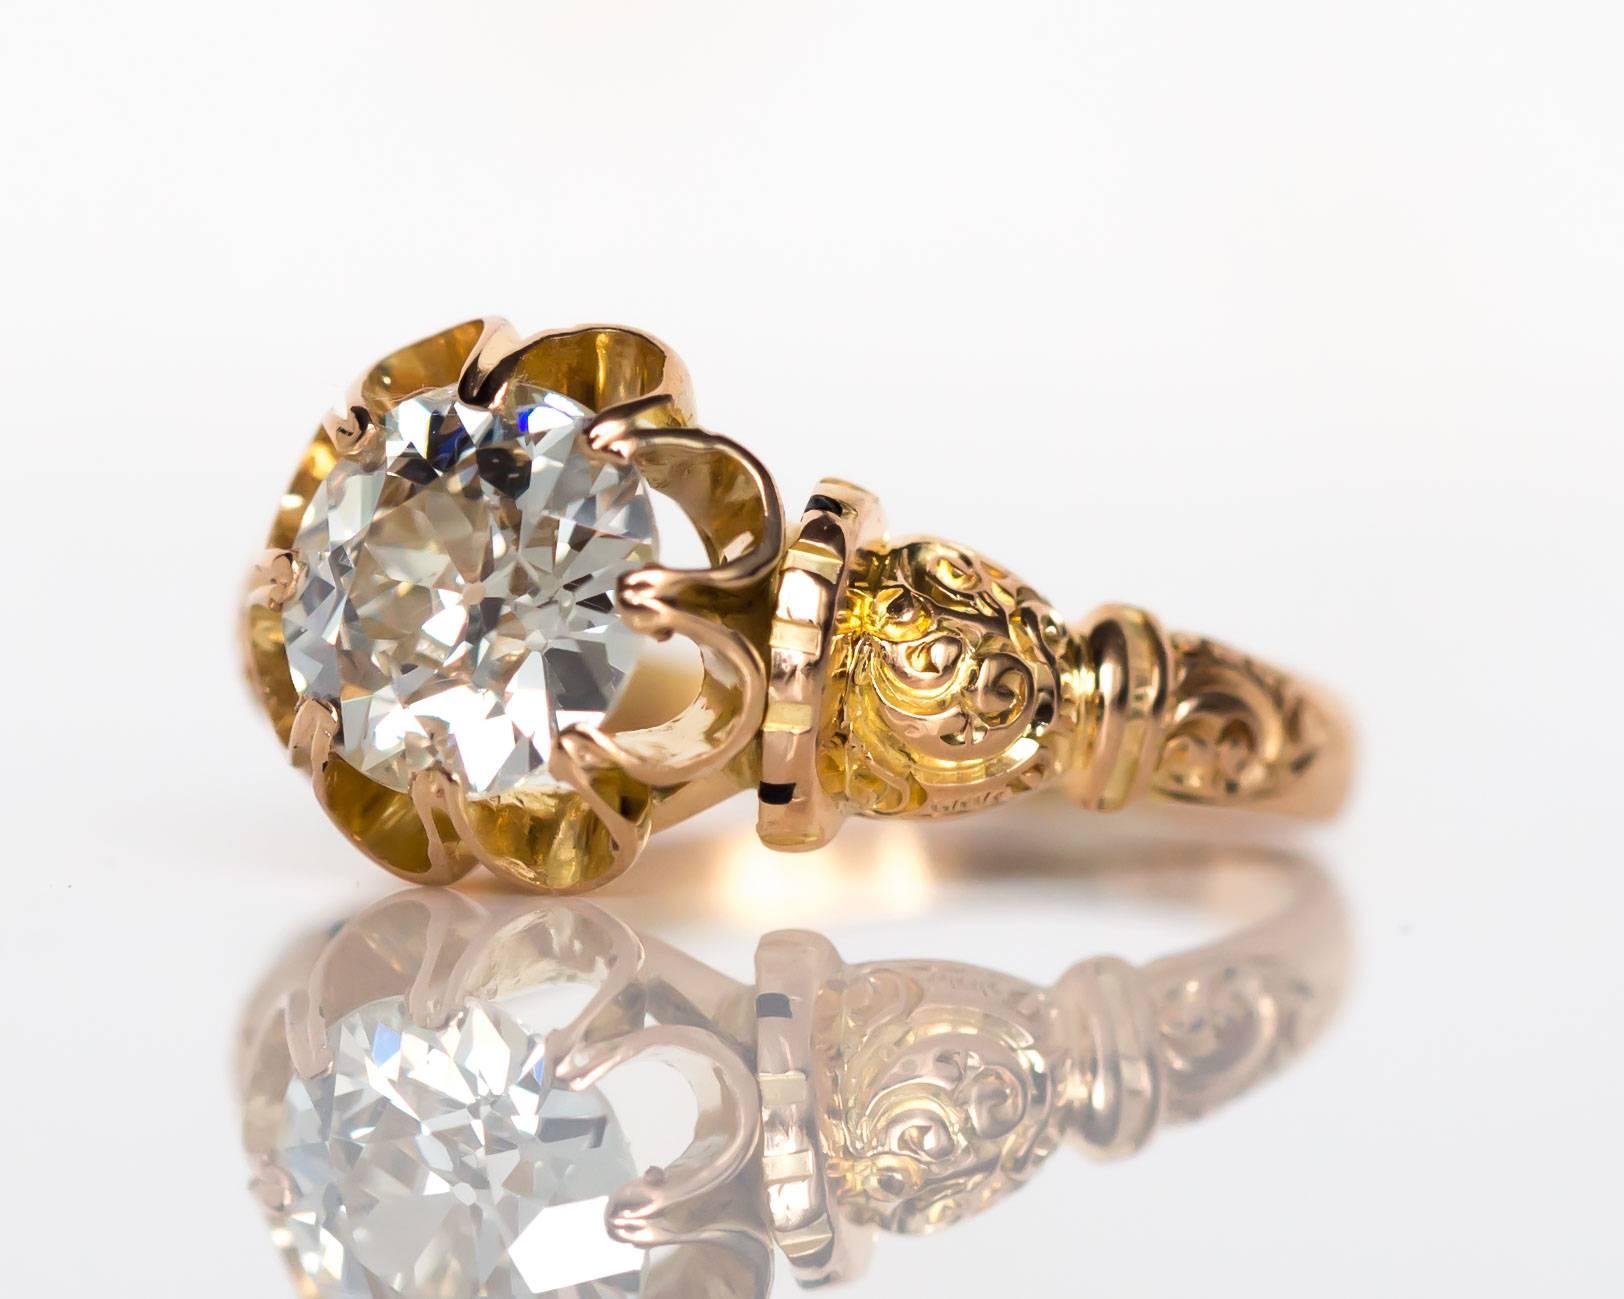 Item Details: 
Ring Size: 4.5
Metal Type: 18 Karat Yellow Gold 
Weight: 2.9 grams

Center Diamond Details
GIA CERTIFIED Center Diamond - Certificate #1182336421
Shape: Old European Brilliant Cut
Carat Weight: 1.02 carat
Color: K
Clarity: